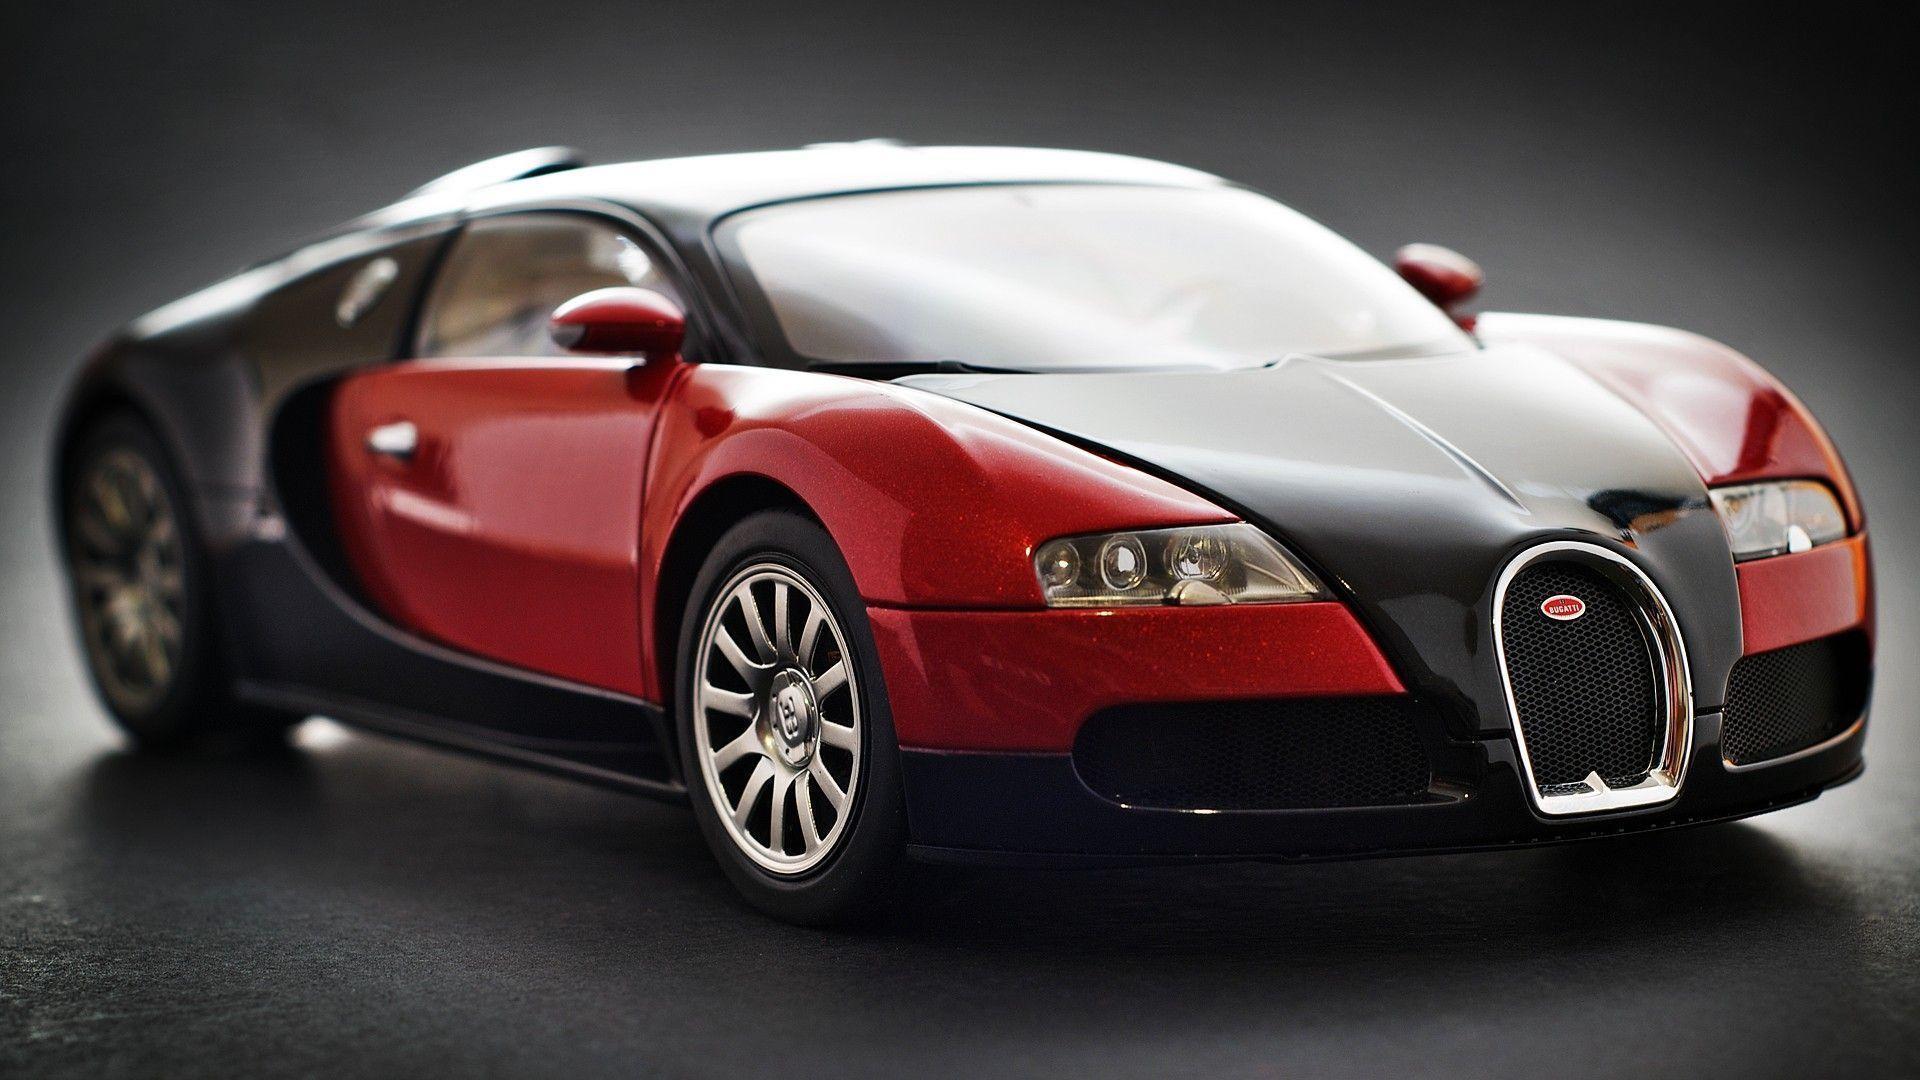 Bugatti Veyron Wallpaper: Red Bugatti Veyron Full HD Wallpaper